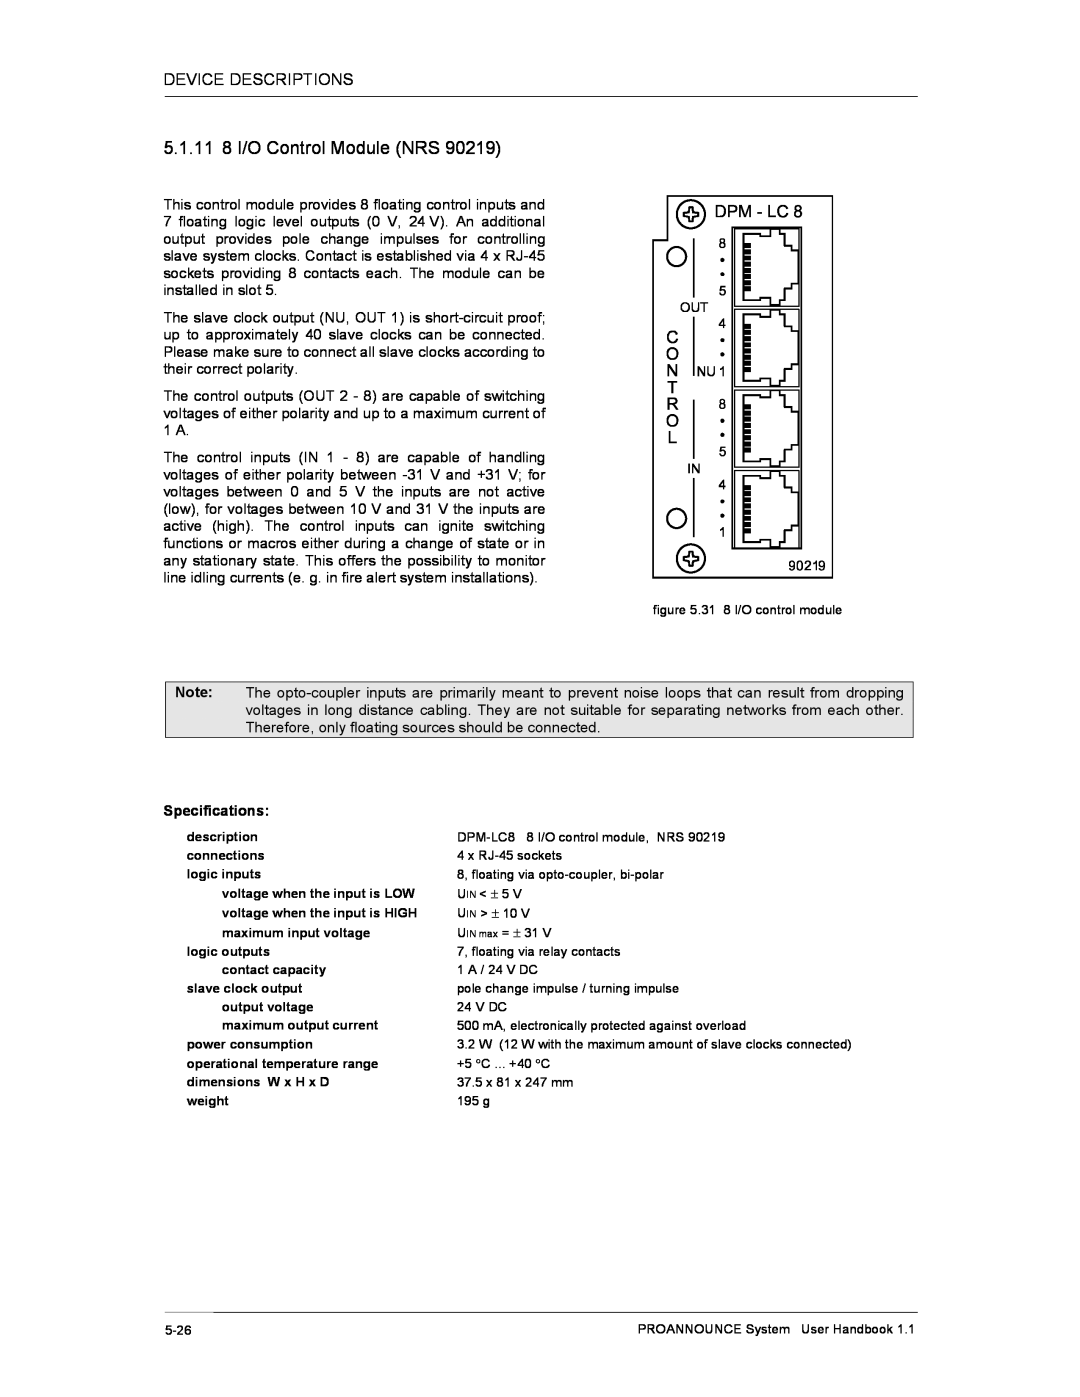 Dynacord DPM 4000 manual 5.1.11 8 I/O Control Module NRS 